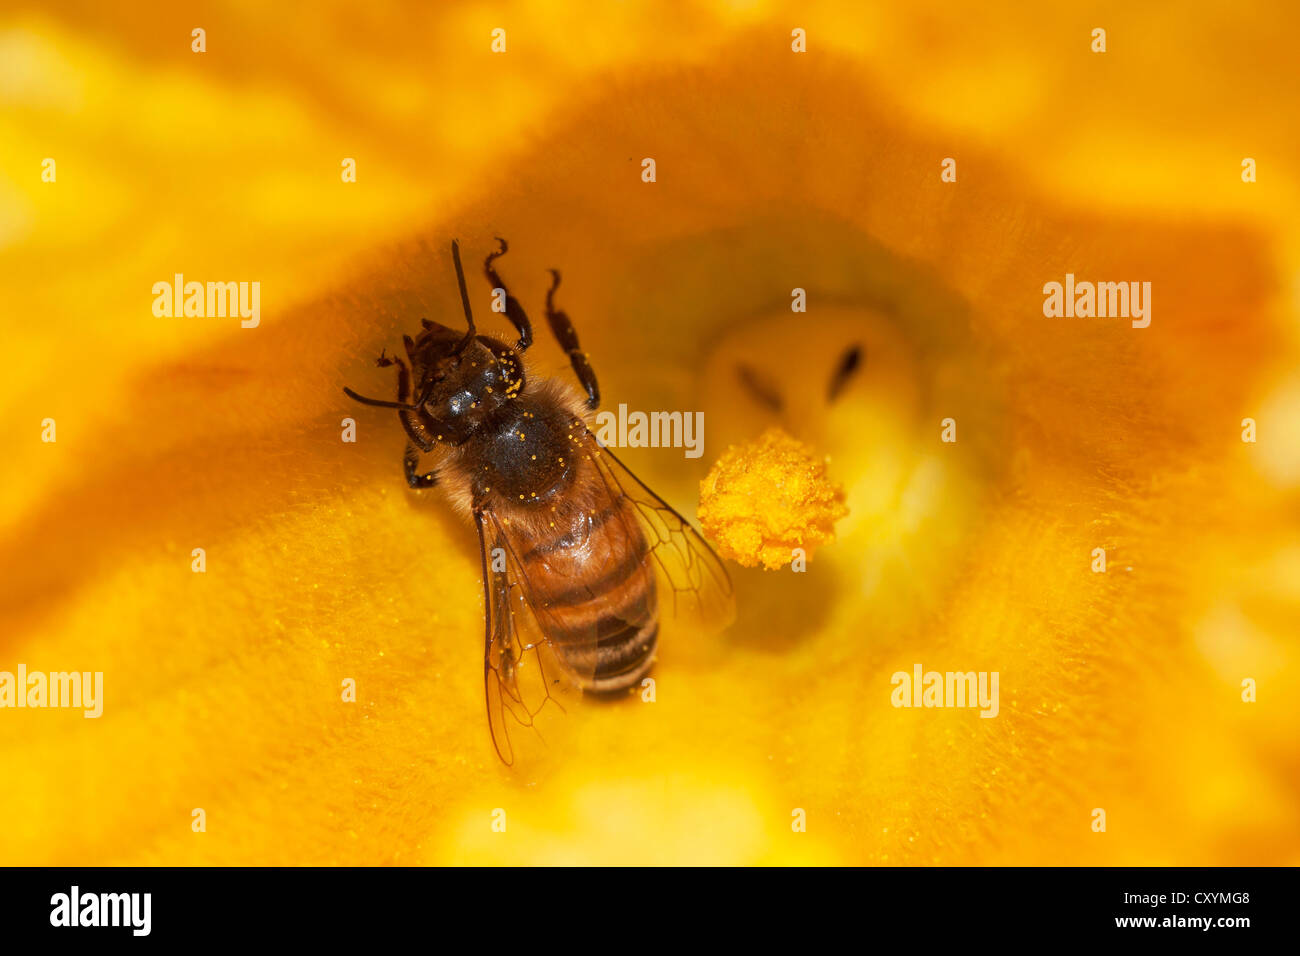 Western honey bee (Apis mellifera) on pumpkin flower, Hokkaido, Japan, Asien Stock Photo